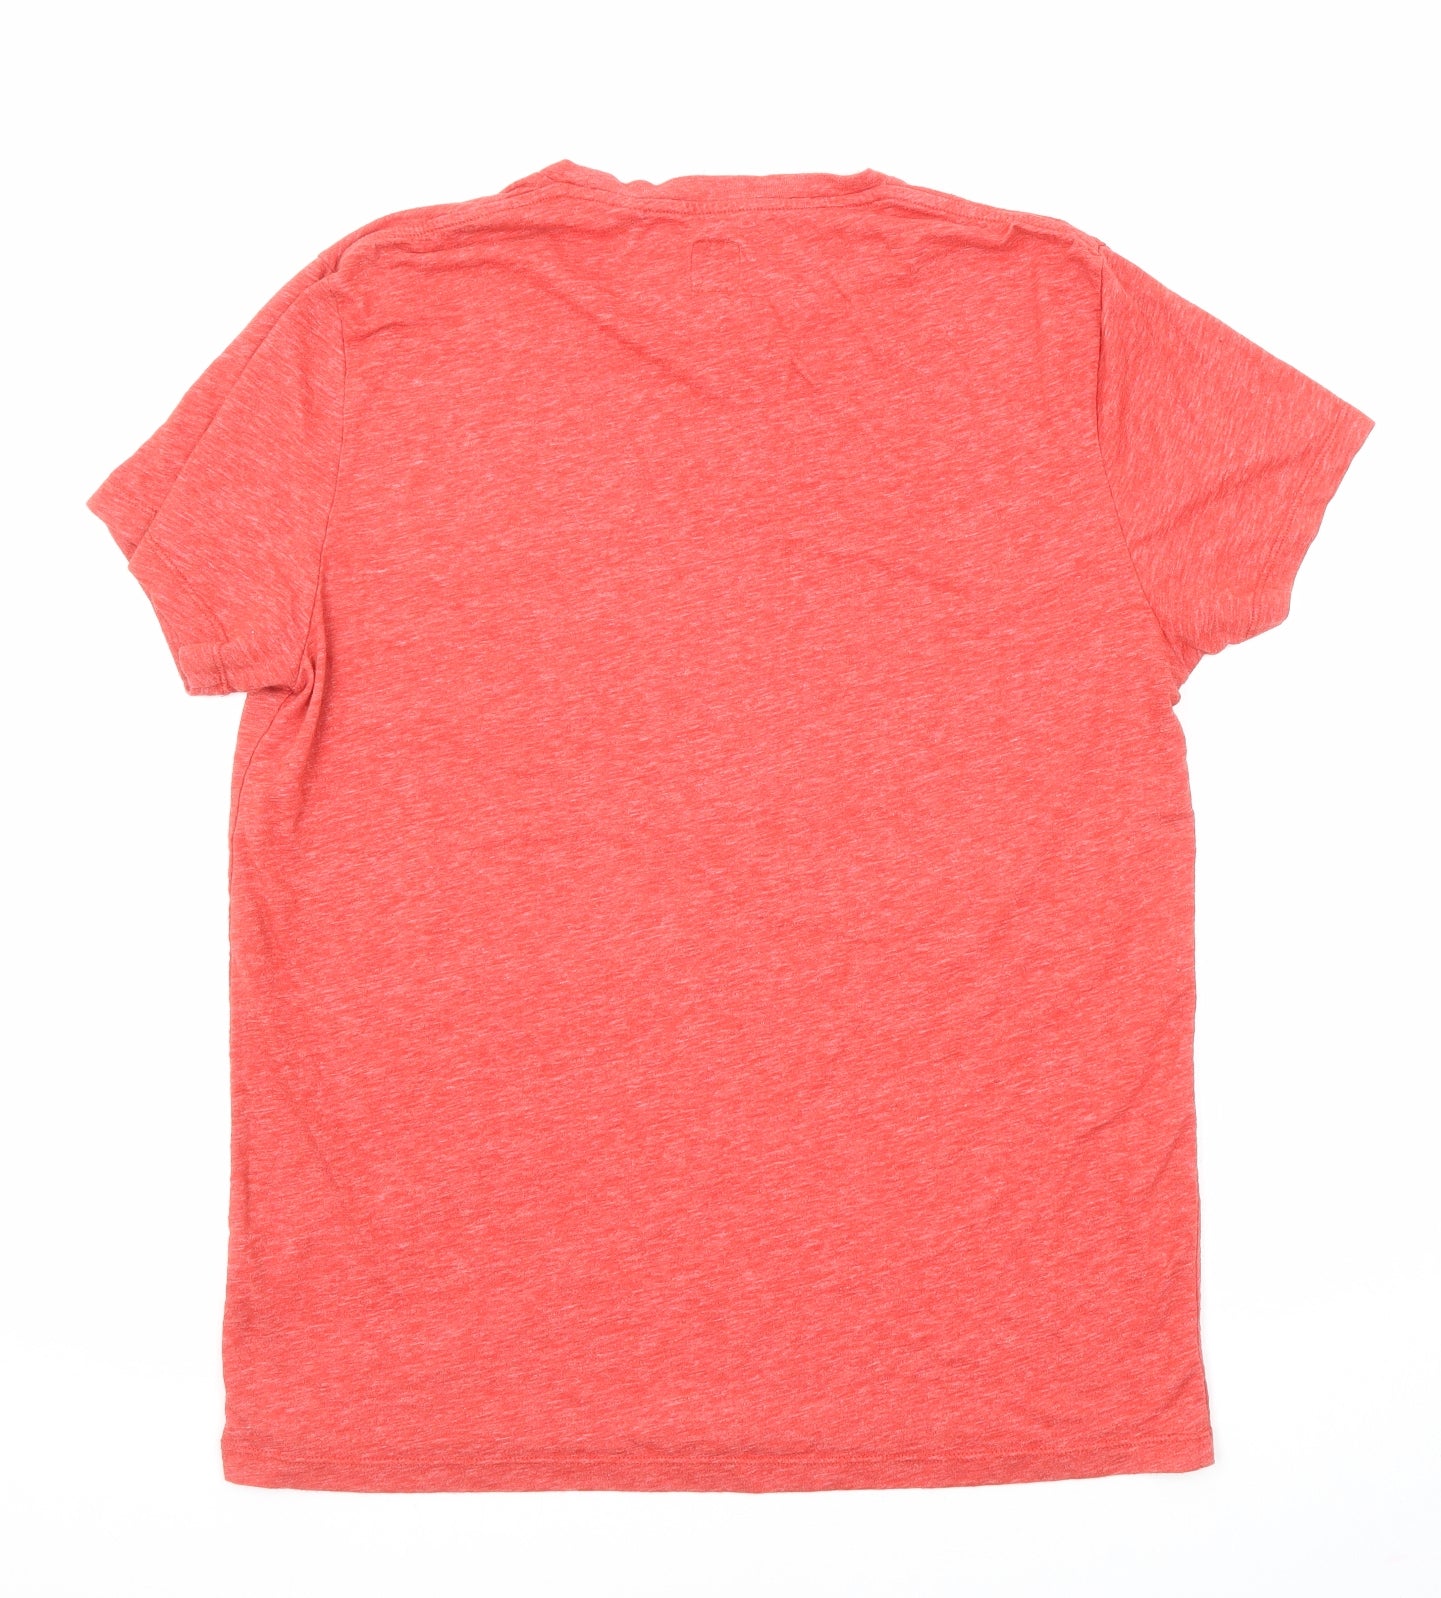 Jack Wills Mens Red Cotton T-Shirt Size L Round Neck